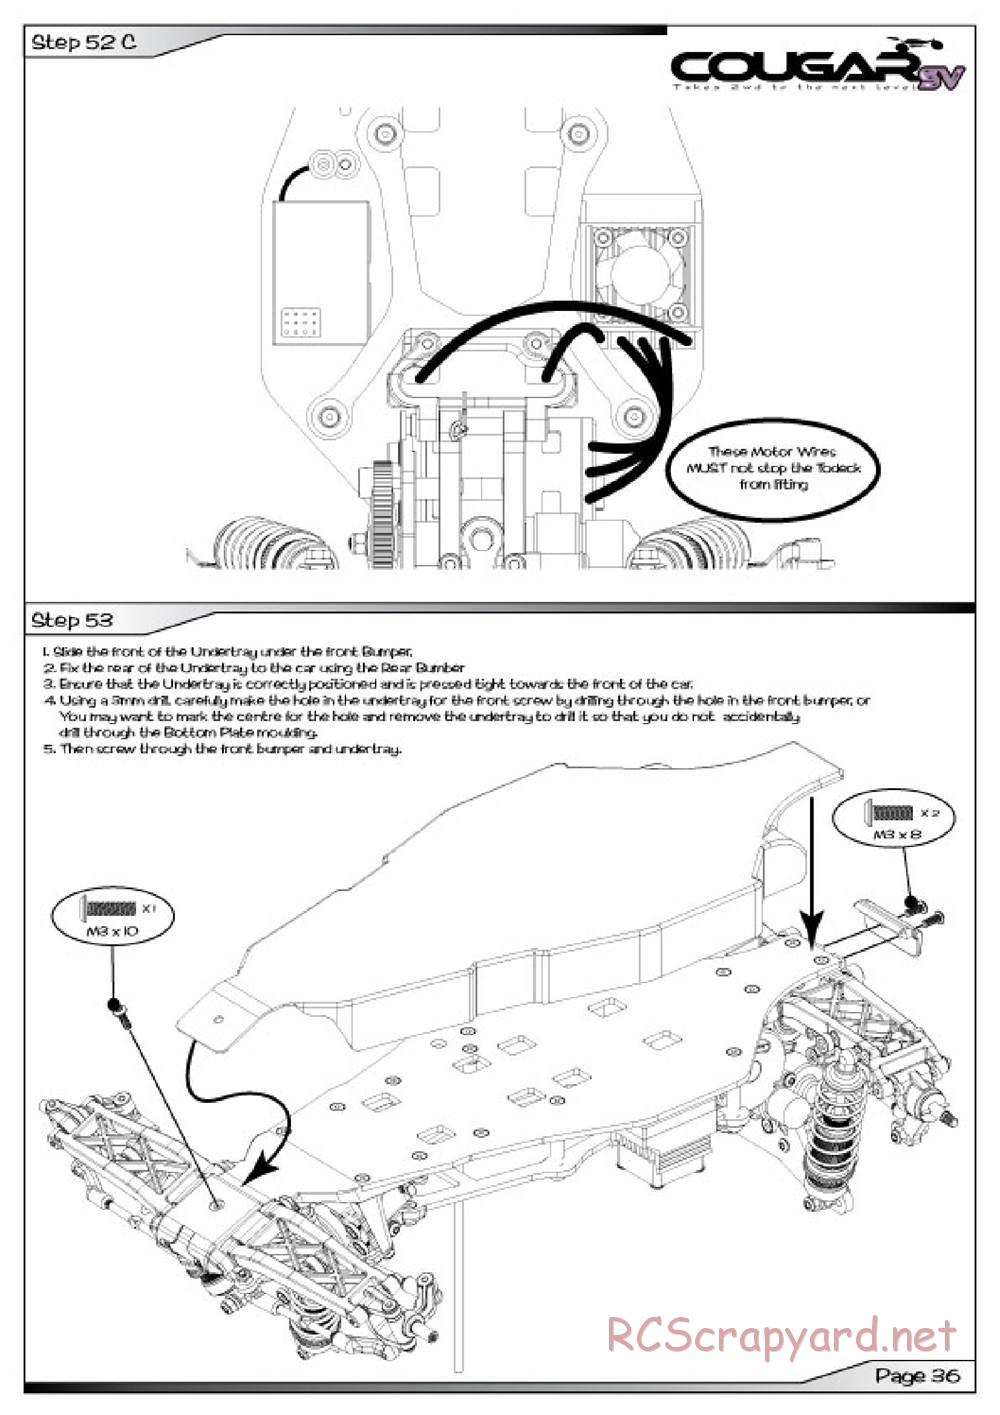 Schumacher - Cougar SV - Manual - Page 37